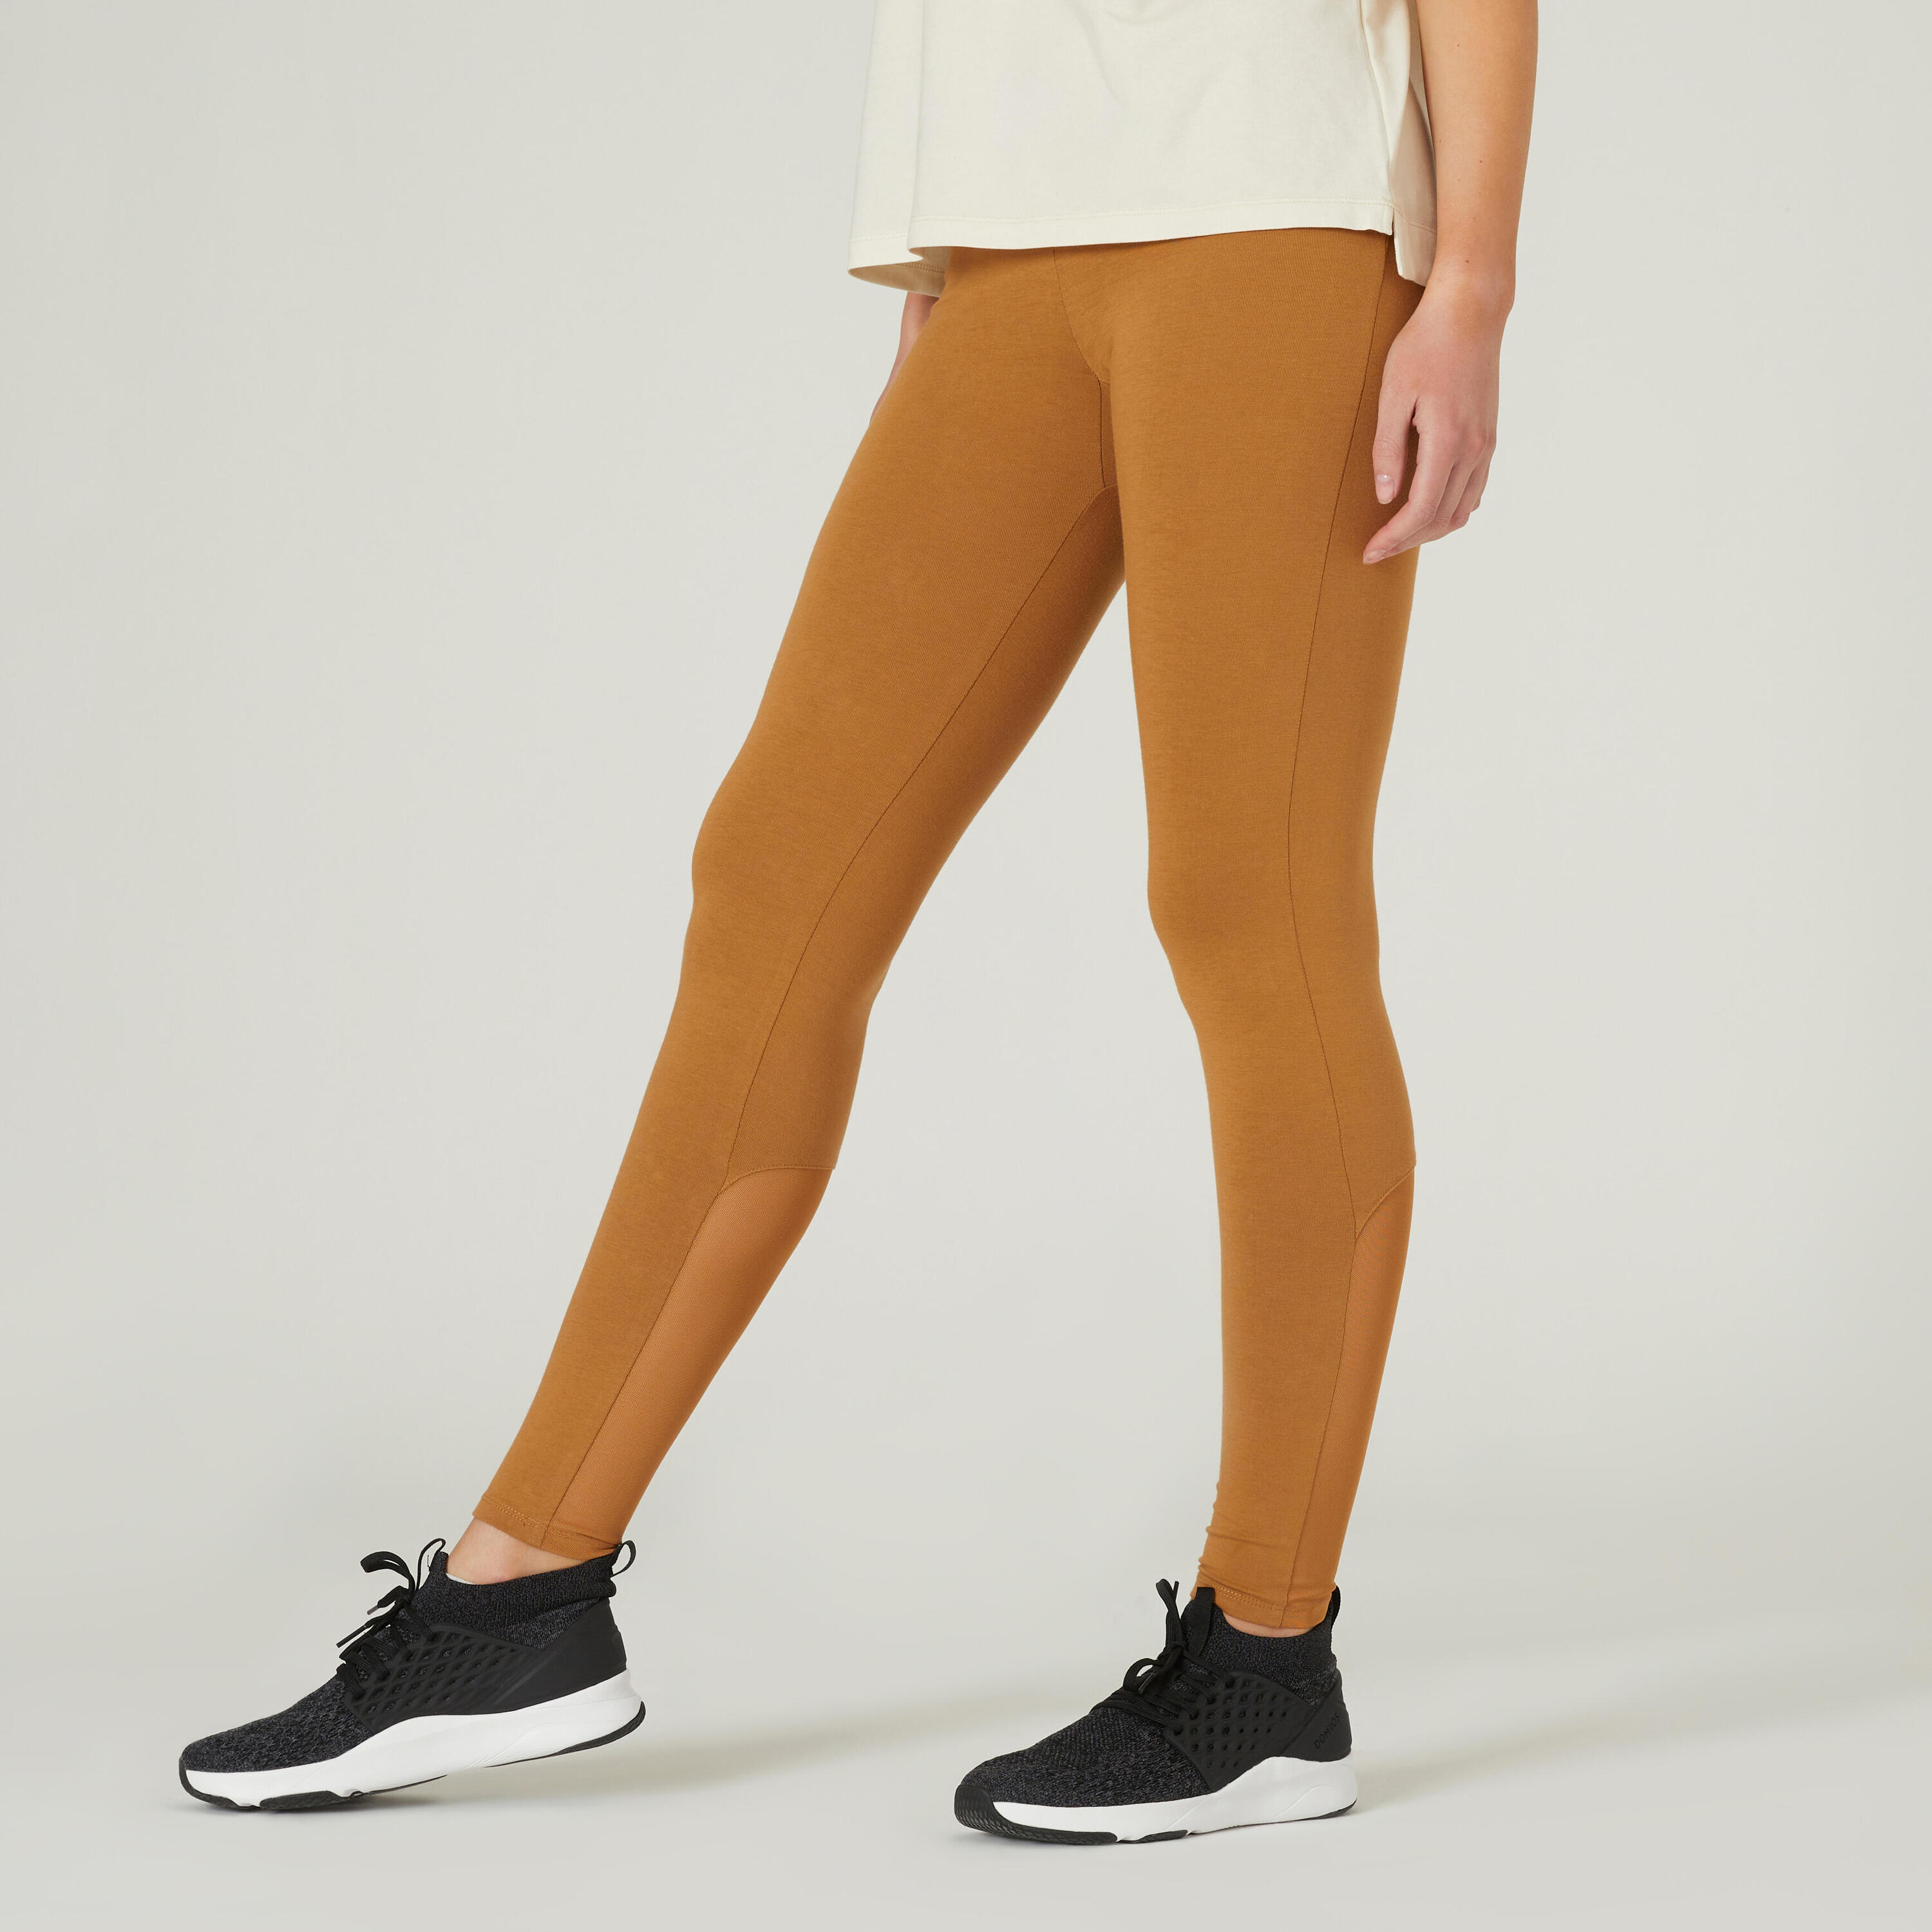 NYAMBA Stretchy High-Waisted Cotton Fitness Leggings with Mesh - Hazelnut